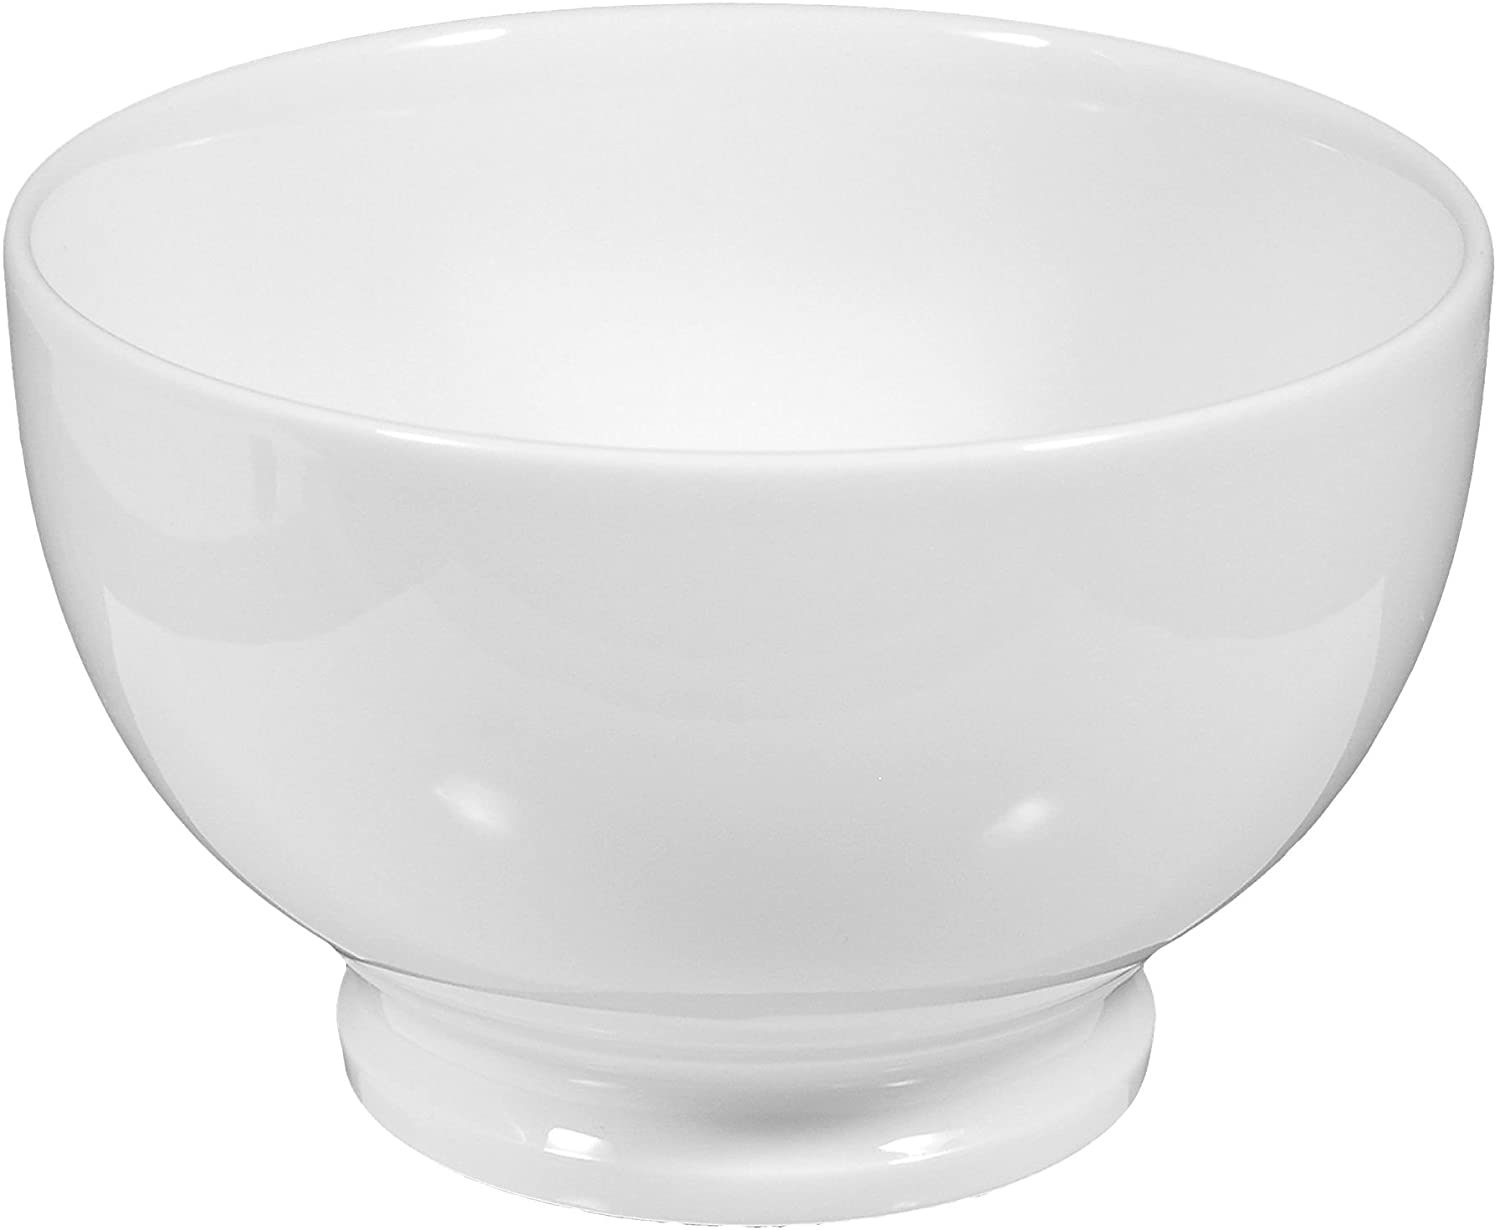 Modern Life Bowl 13 cm White Universal 00006 by Seltmann Weiden